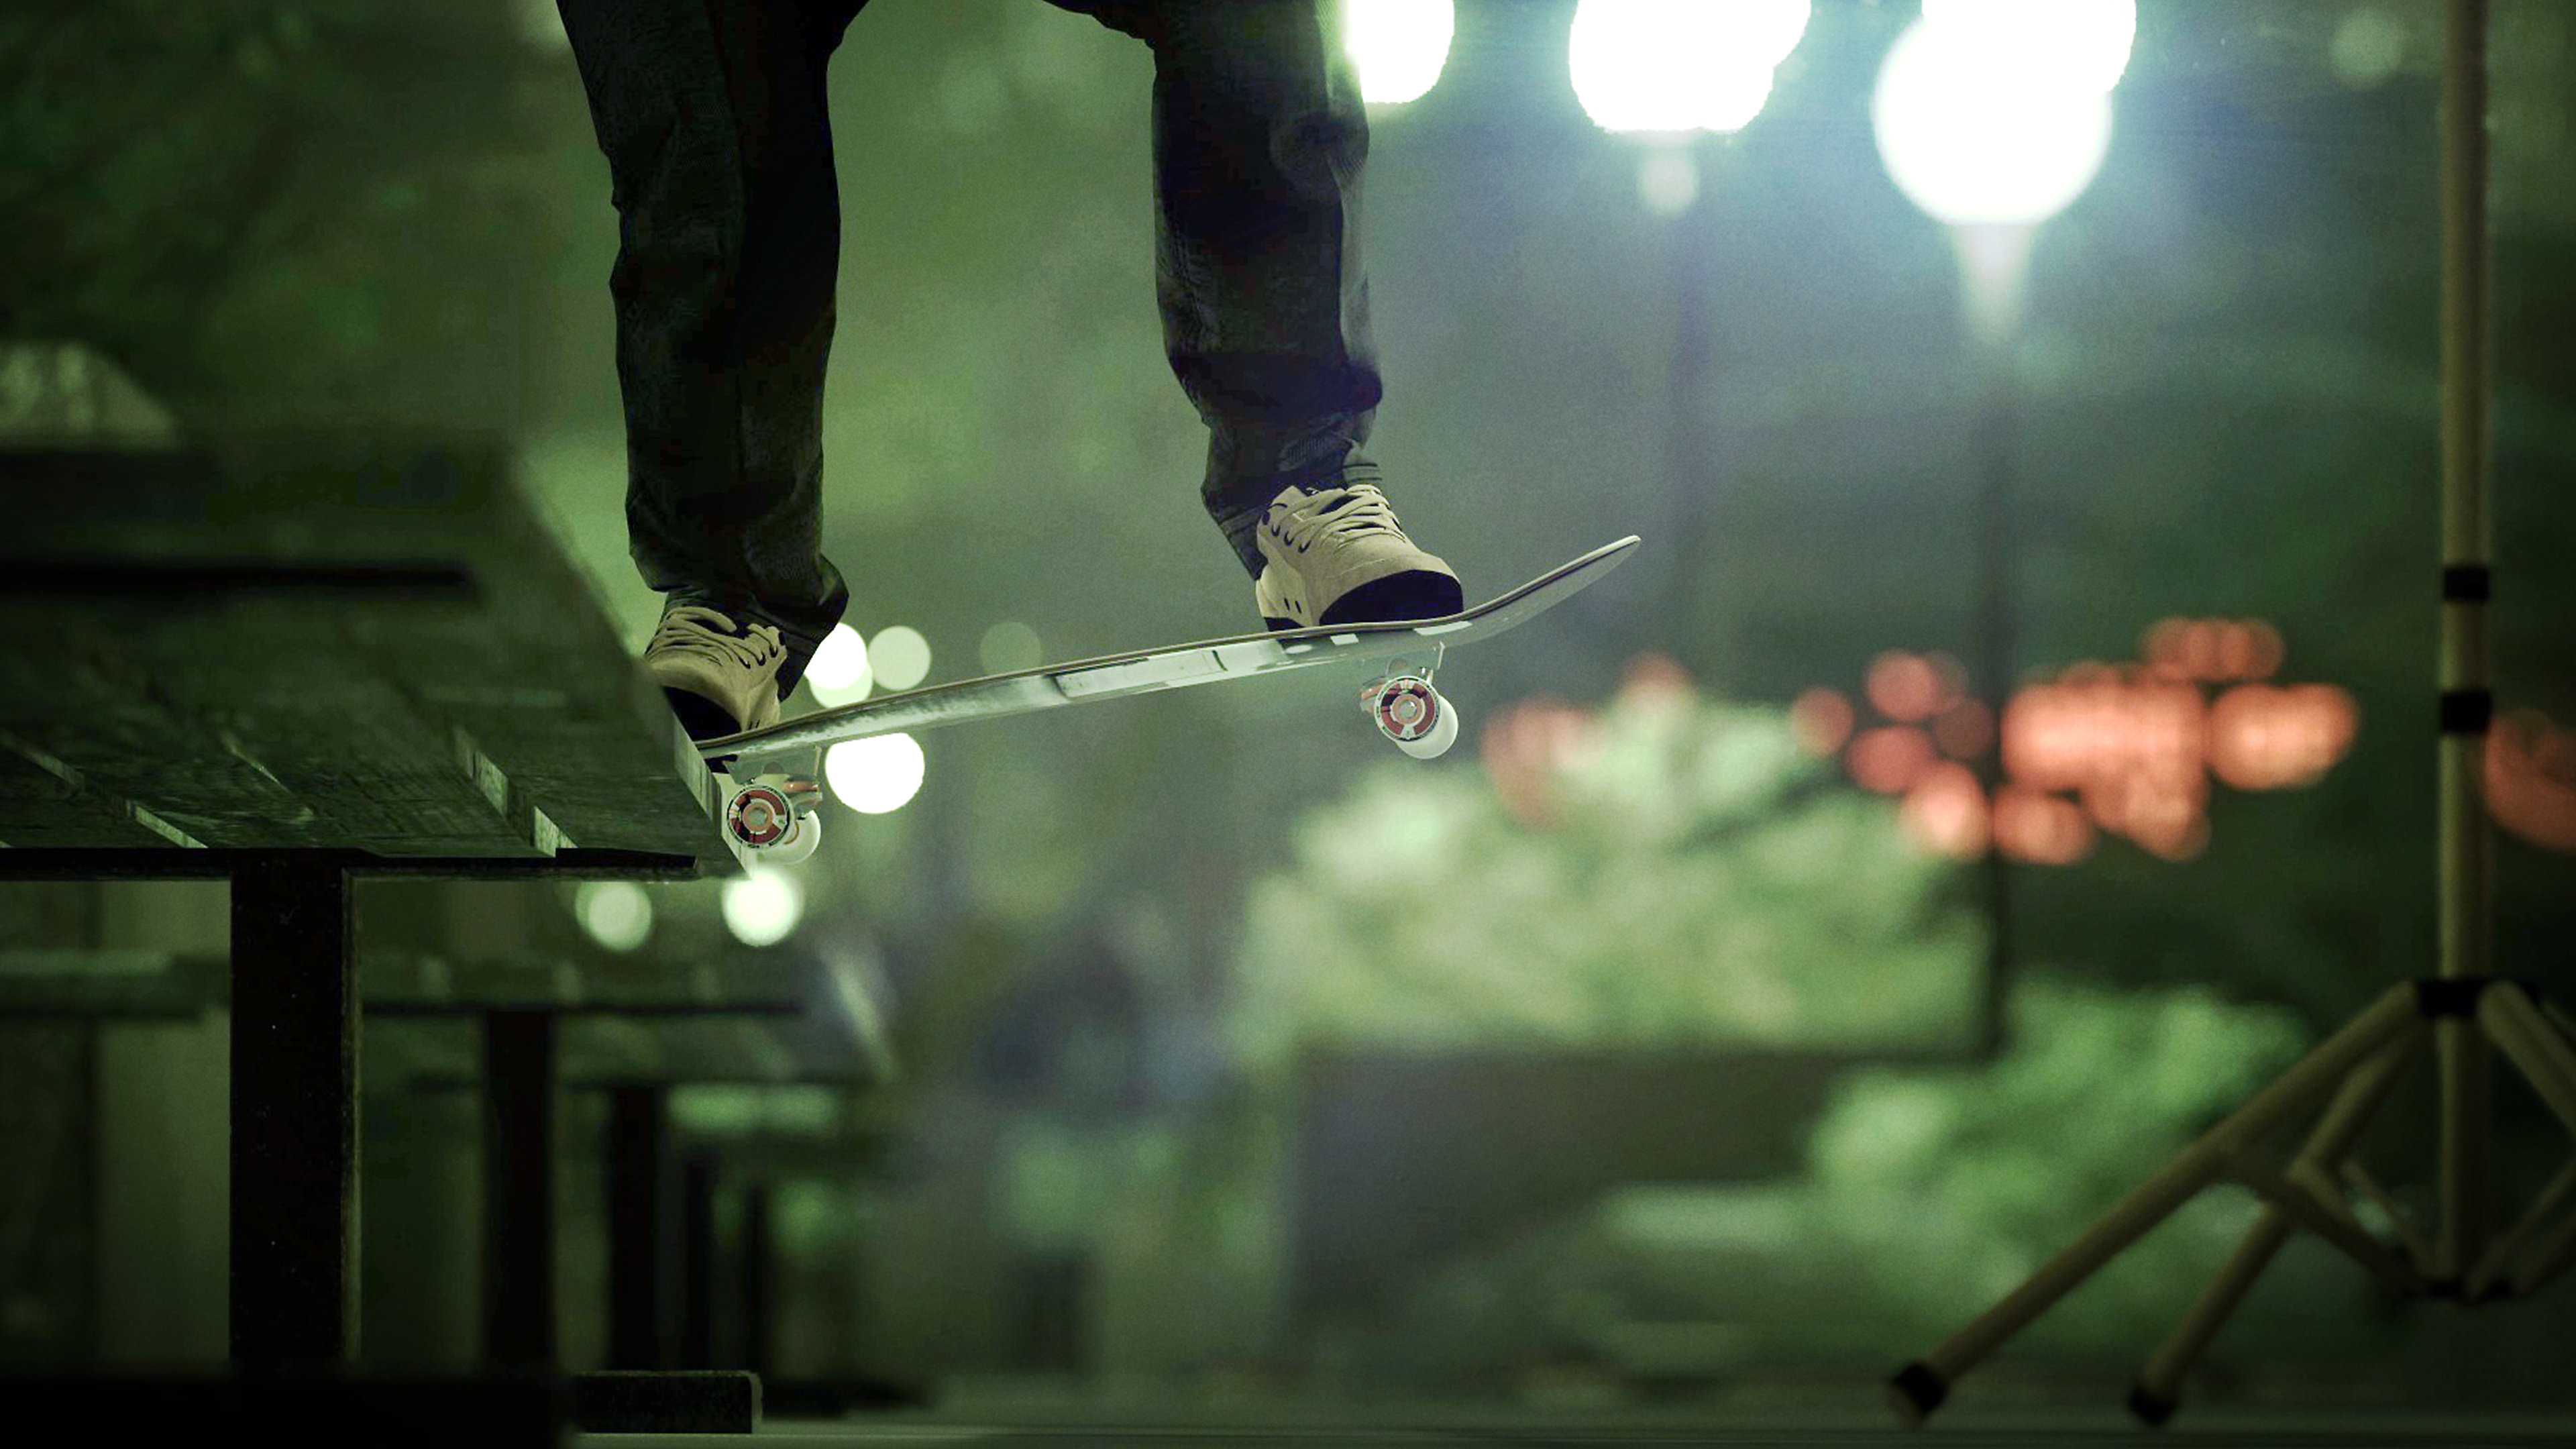 Captura de pantalla de Session: Skate Sim que muestra a un skater grindando en un banco